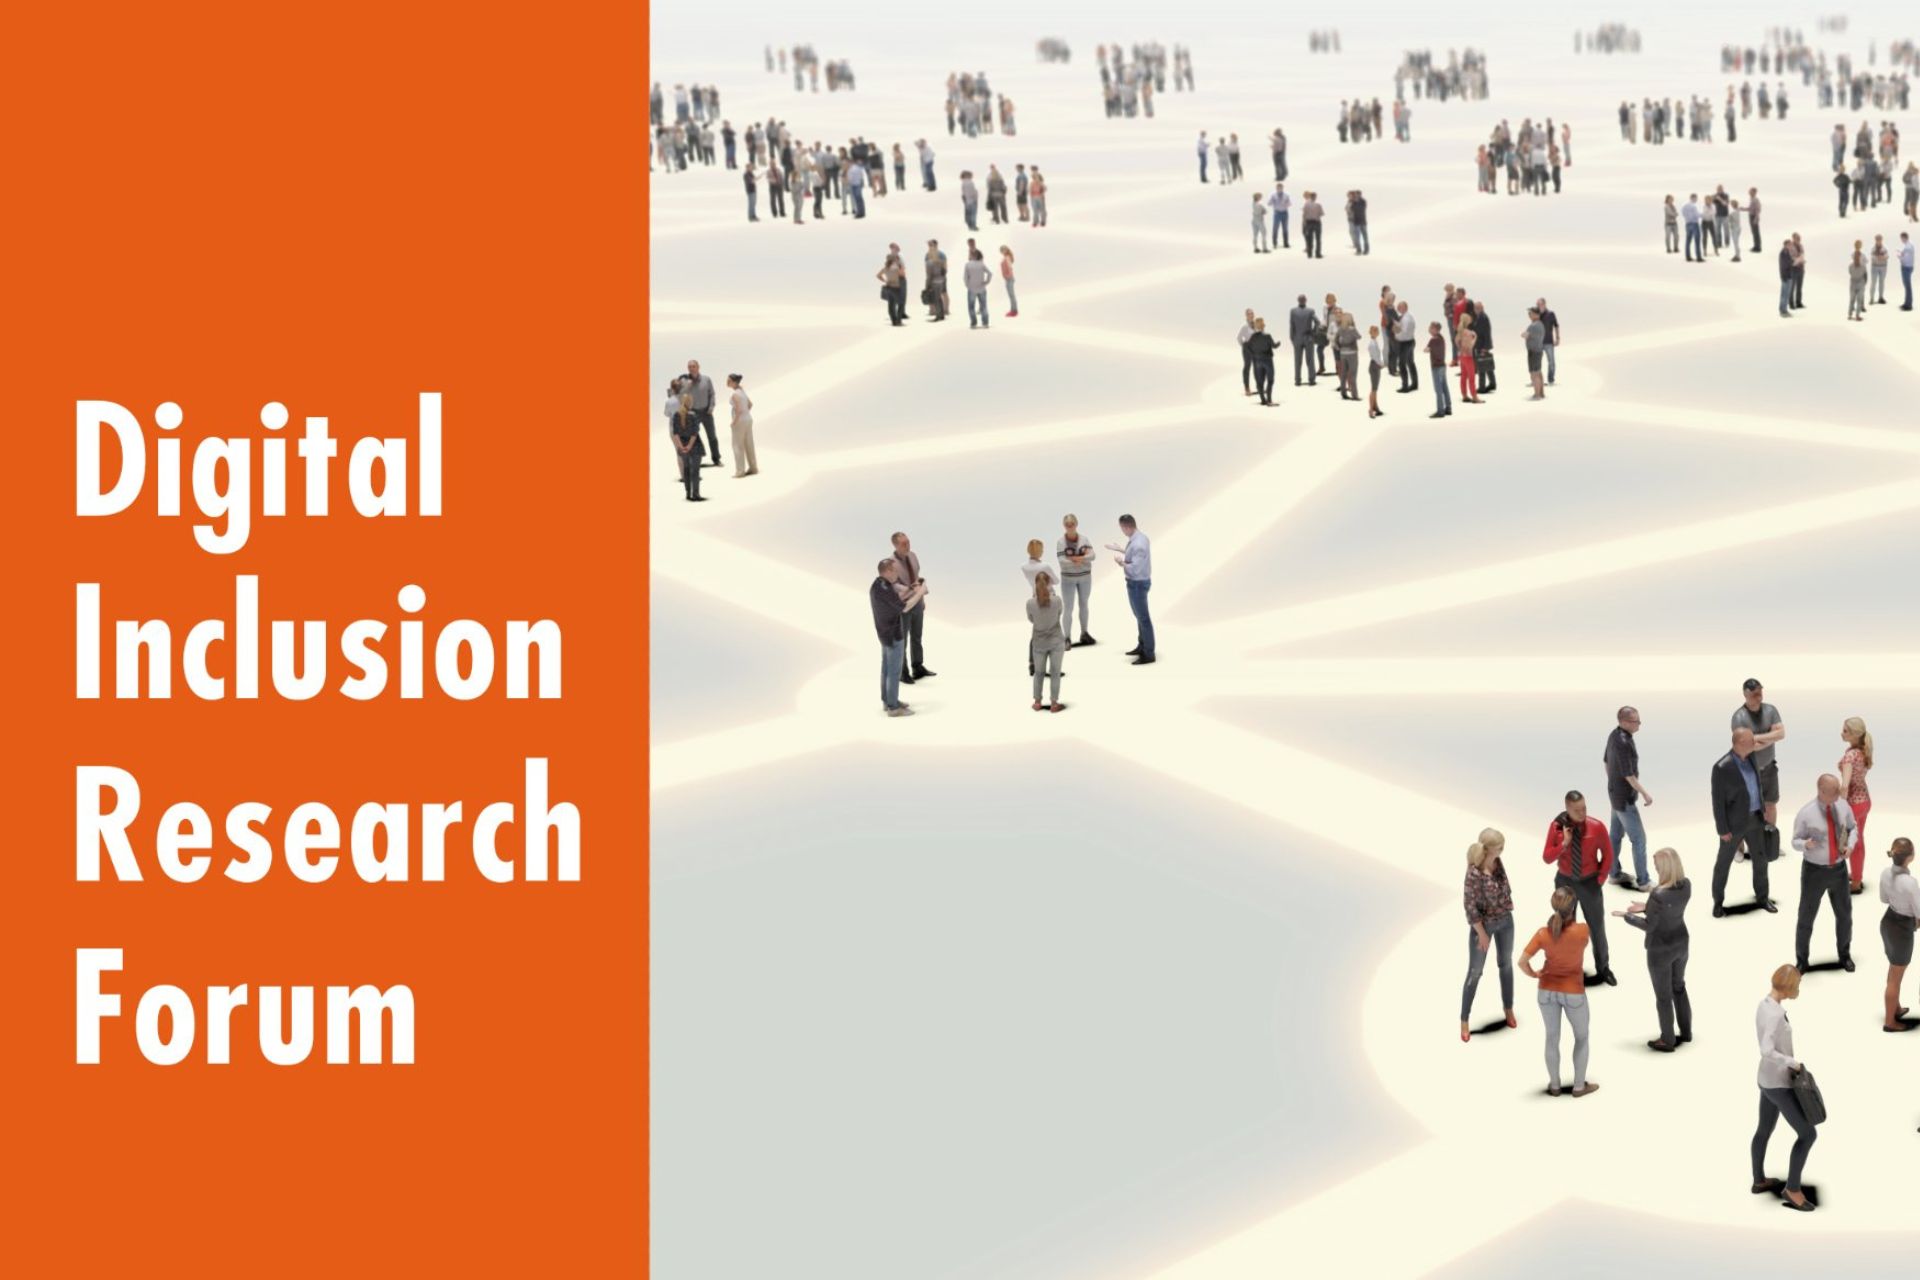 Digital Inclusion Research Forum